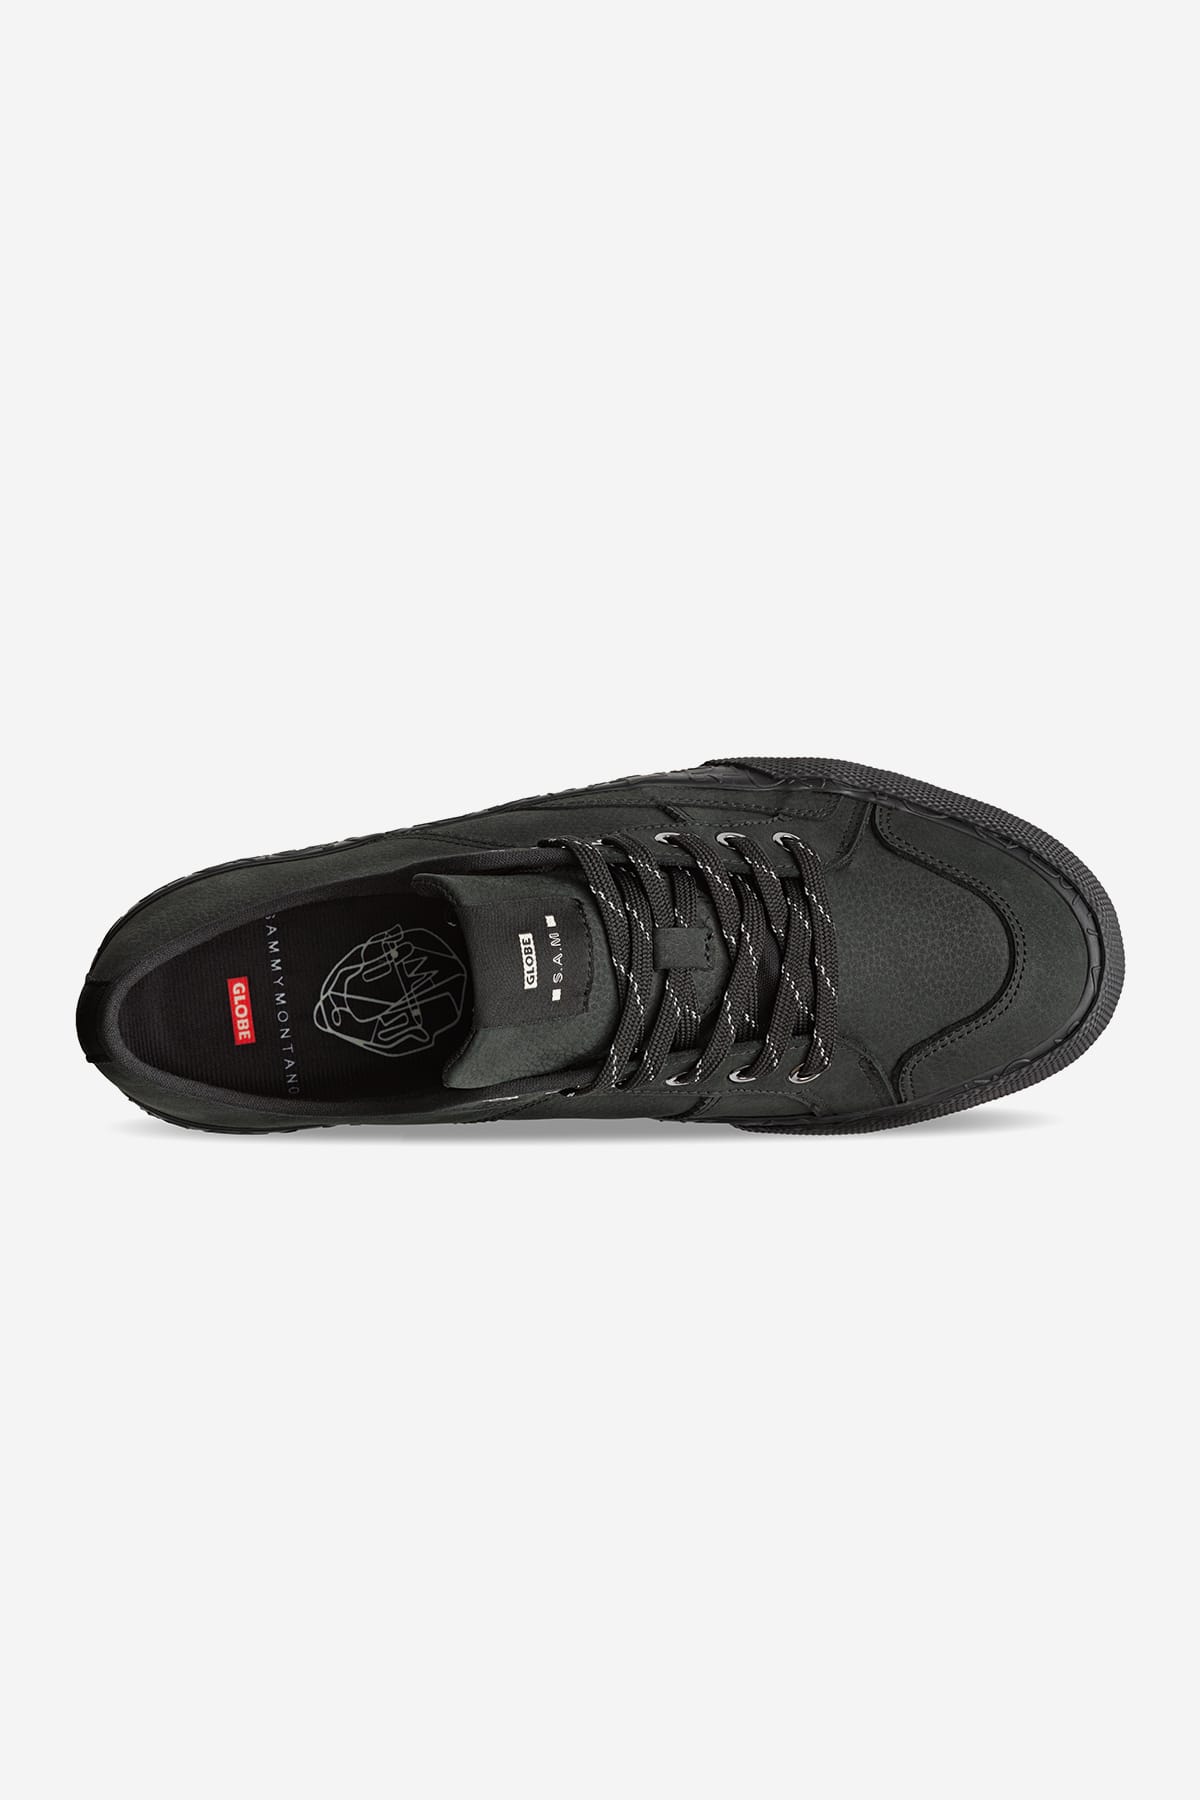 Globe - Surplus - Black/Montano - skateboard Chaussures